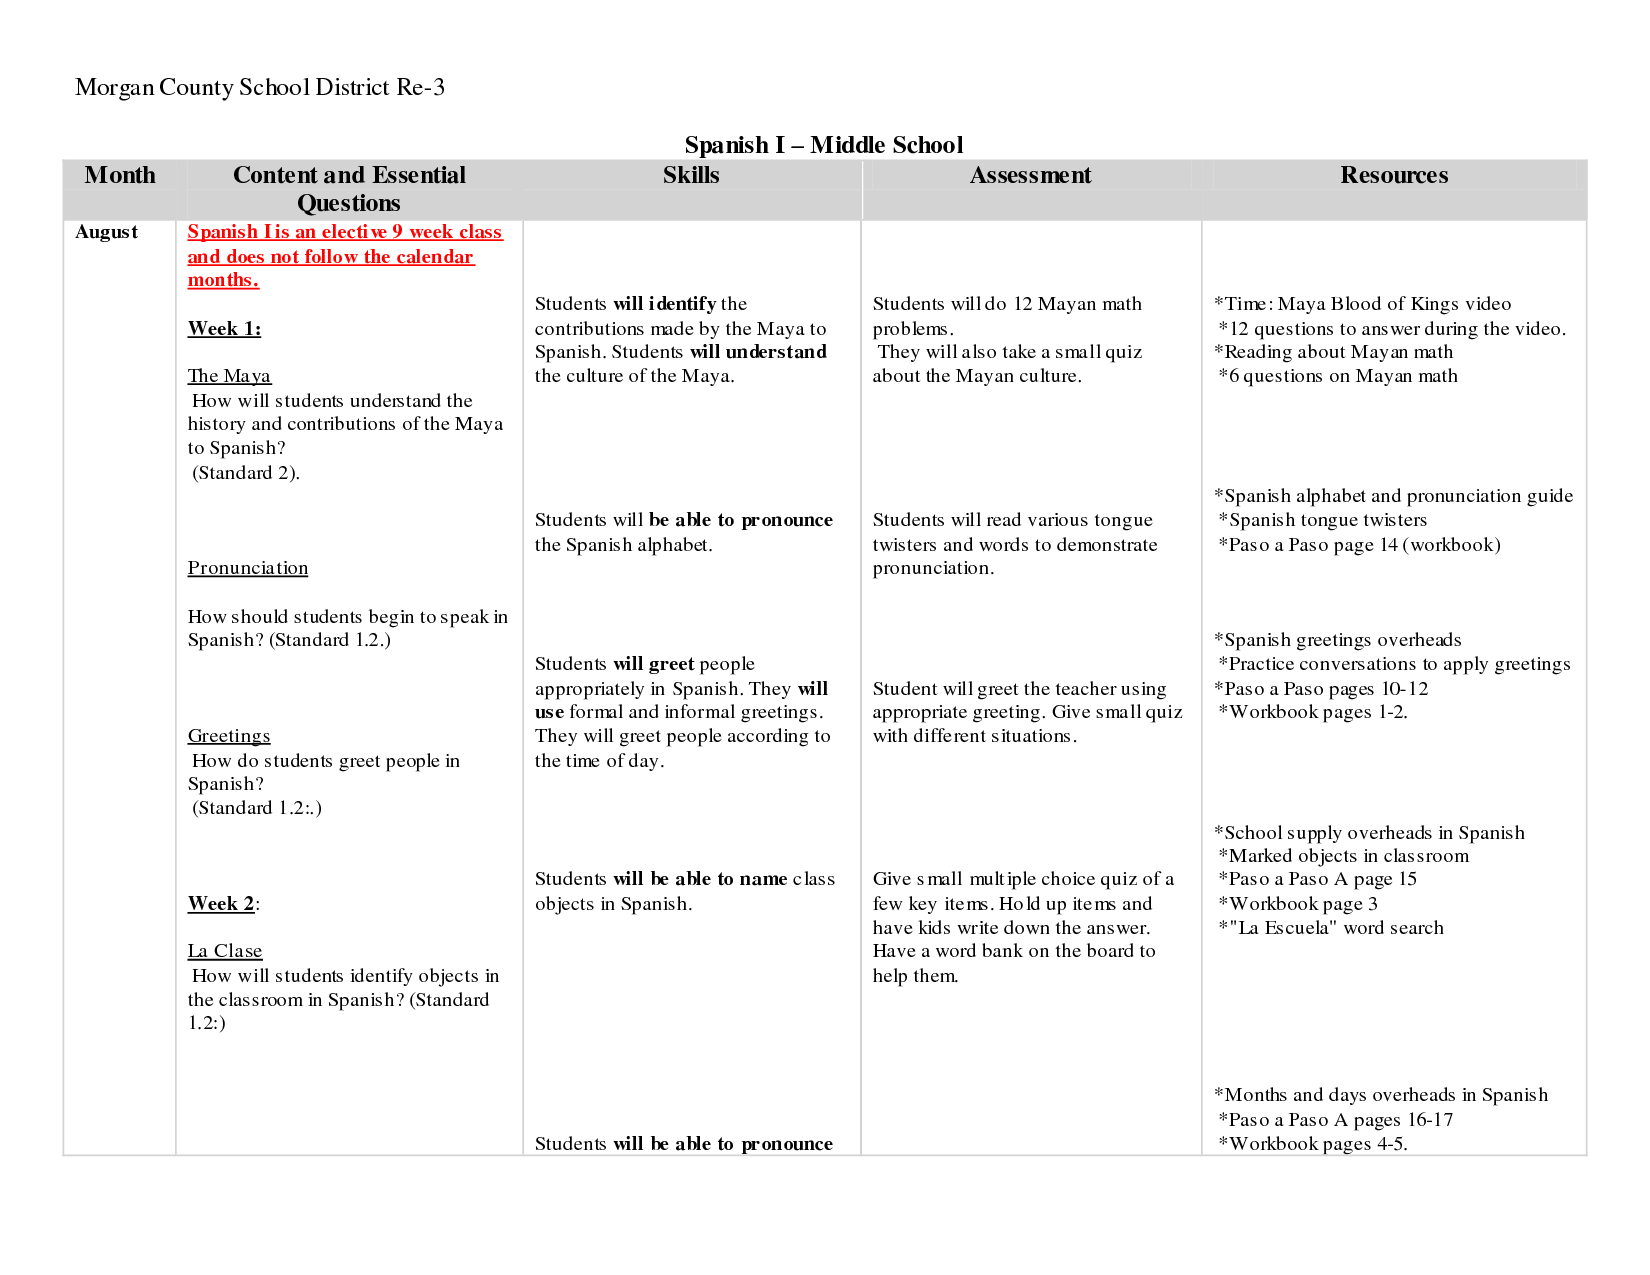 Worksheet : Learn Spanish Worksheets Learning Kindergart - Free Printable Elementary Spanish Worksheets